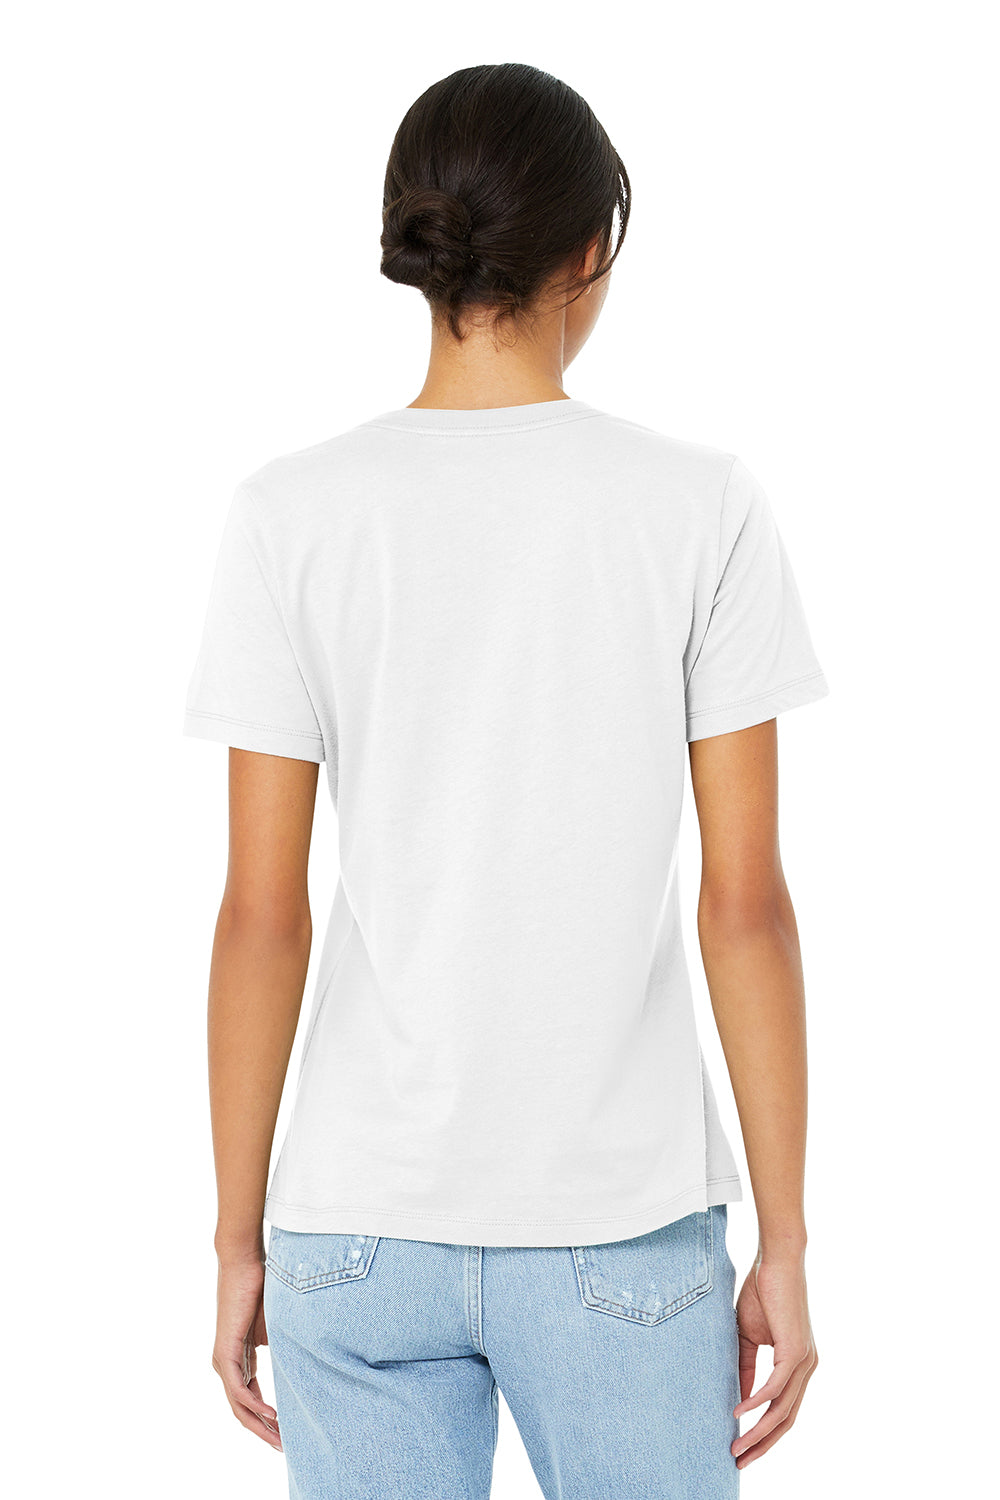 Bella + Canvas BC6400CVC/6400CVC Womens CVC Short Sleeve Crewneck T-Shirt Solid White Model Back